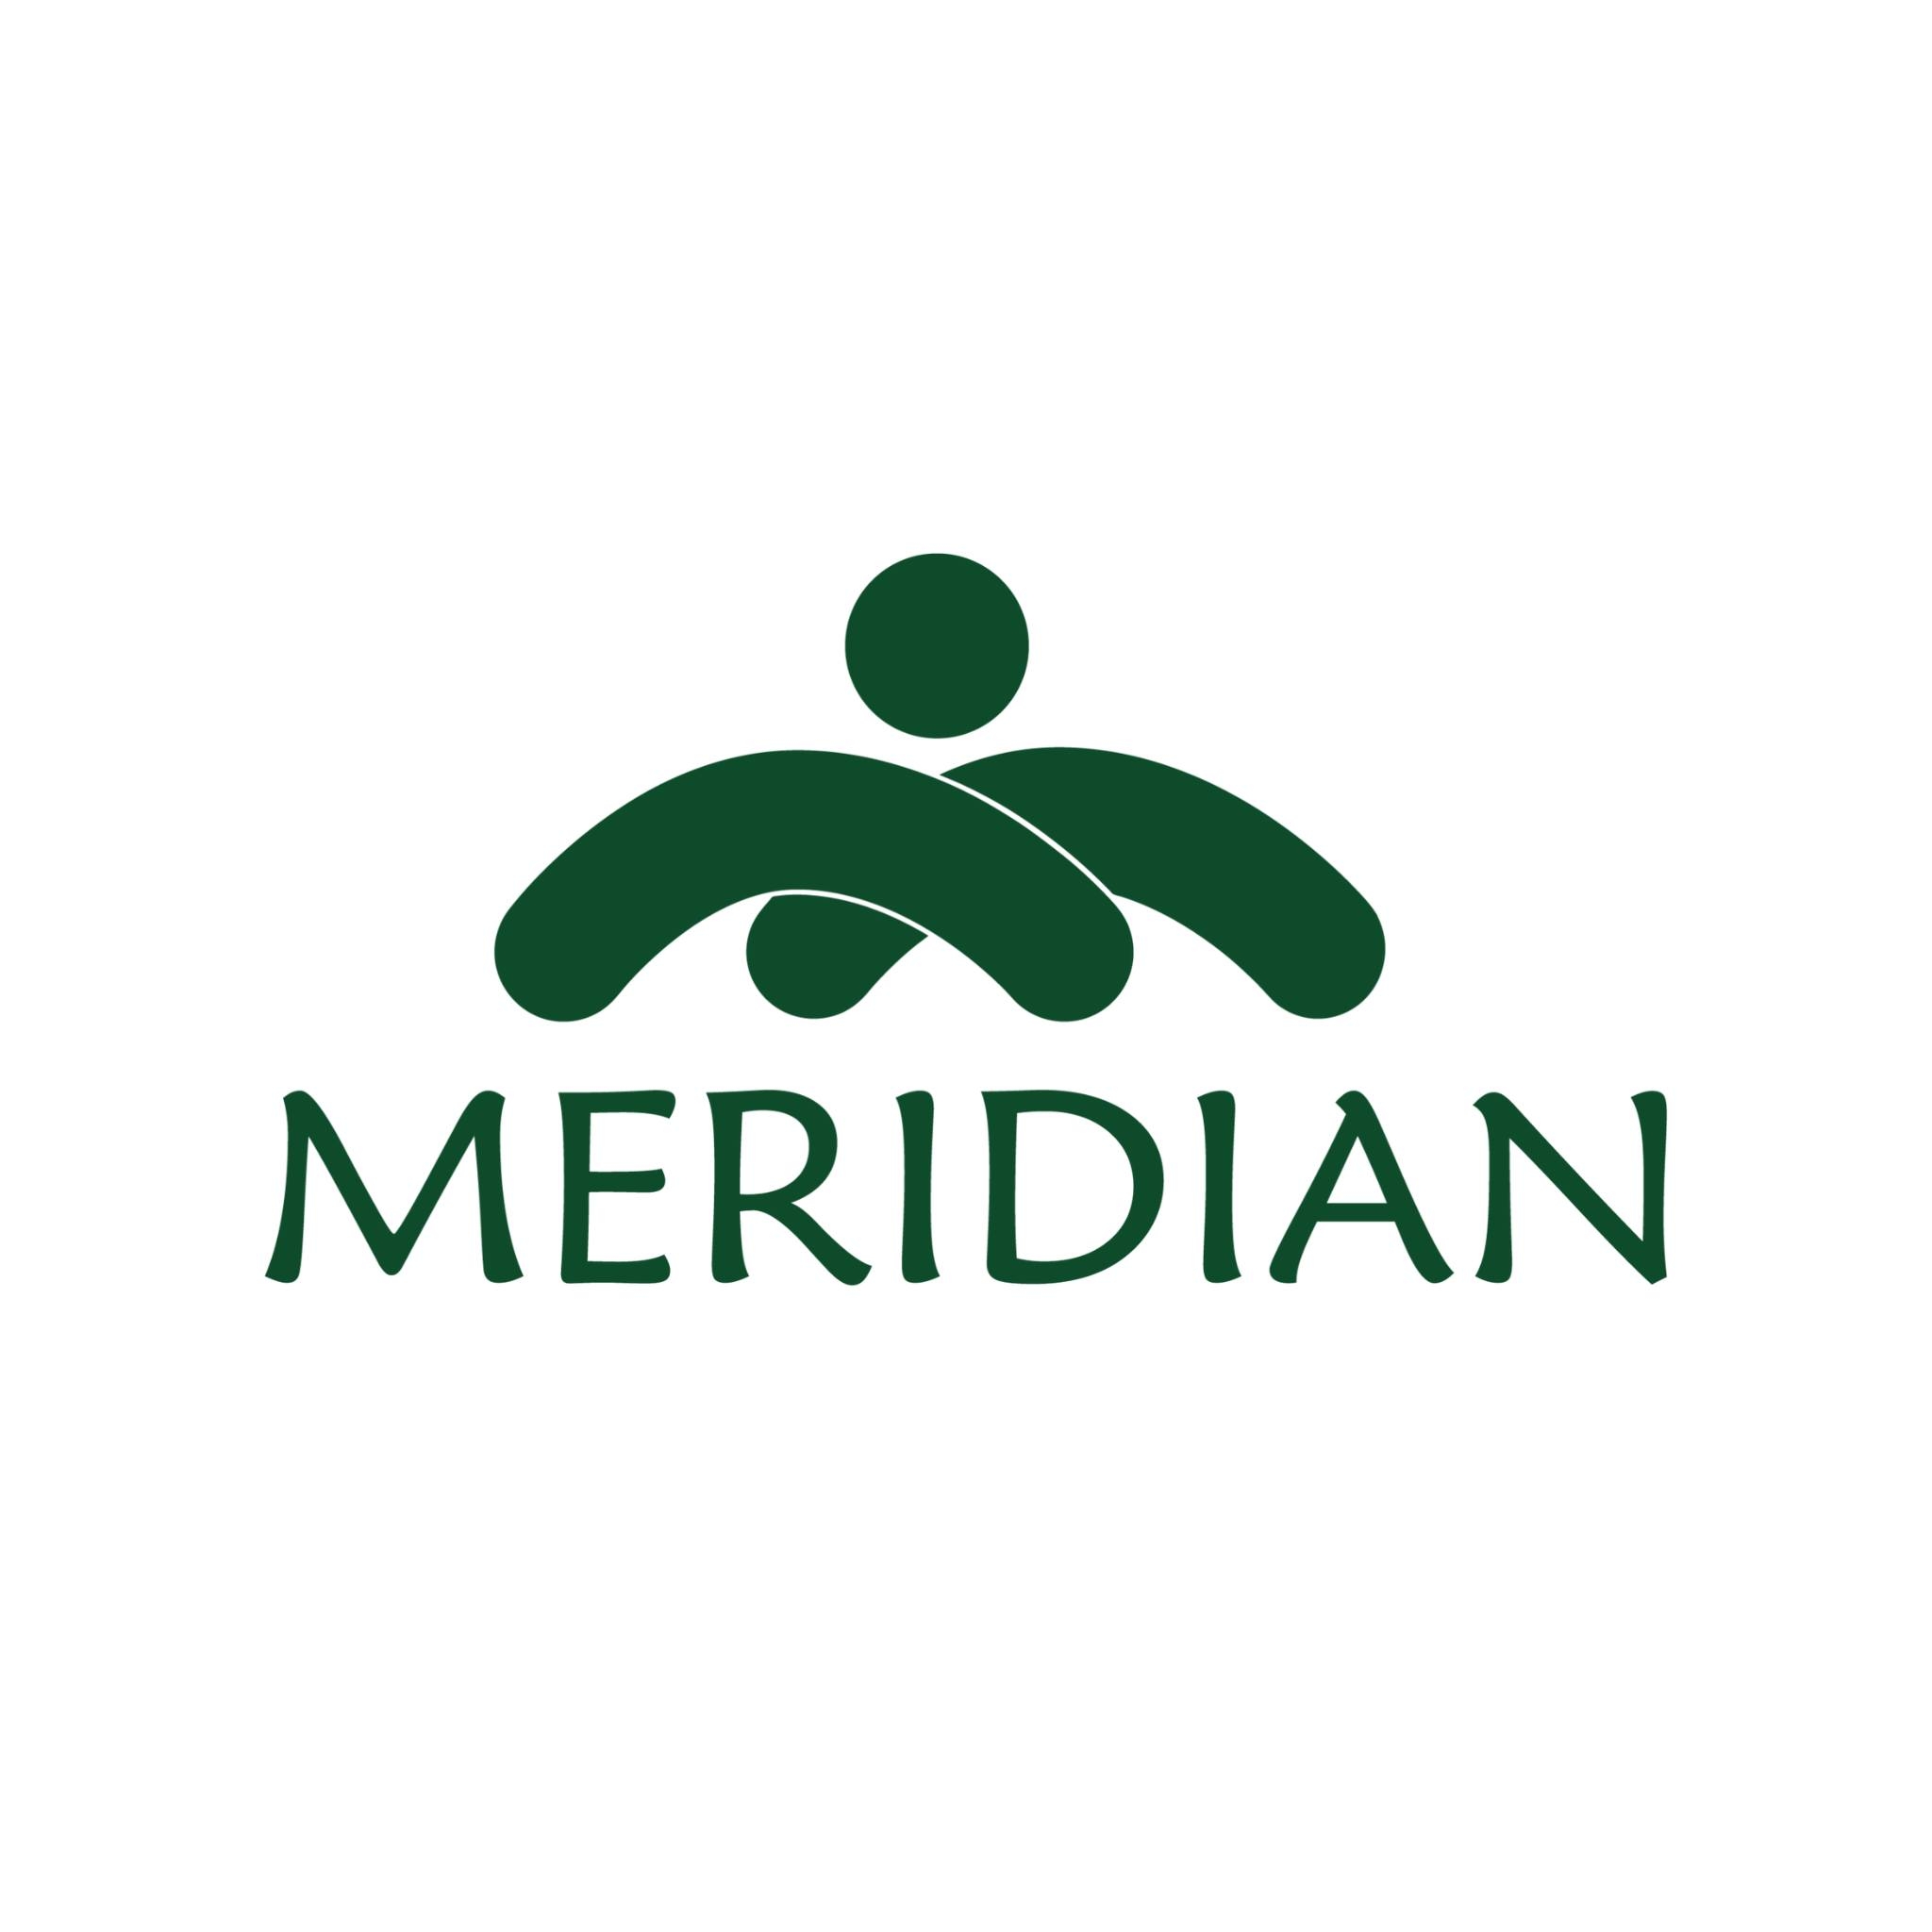 Meridian Behavioral Healthcare Inc